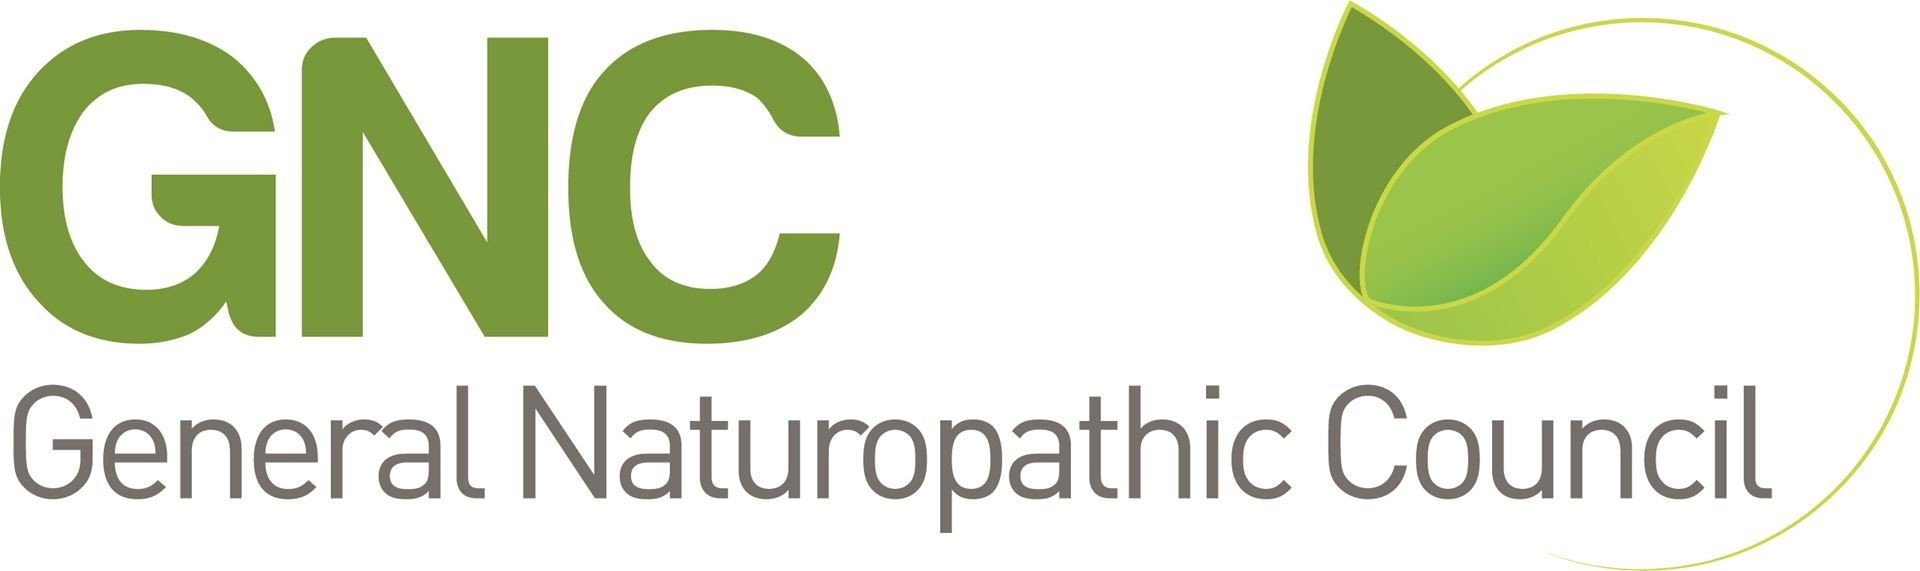 General Naturopathic Council logo